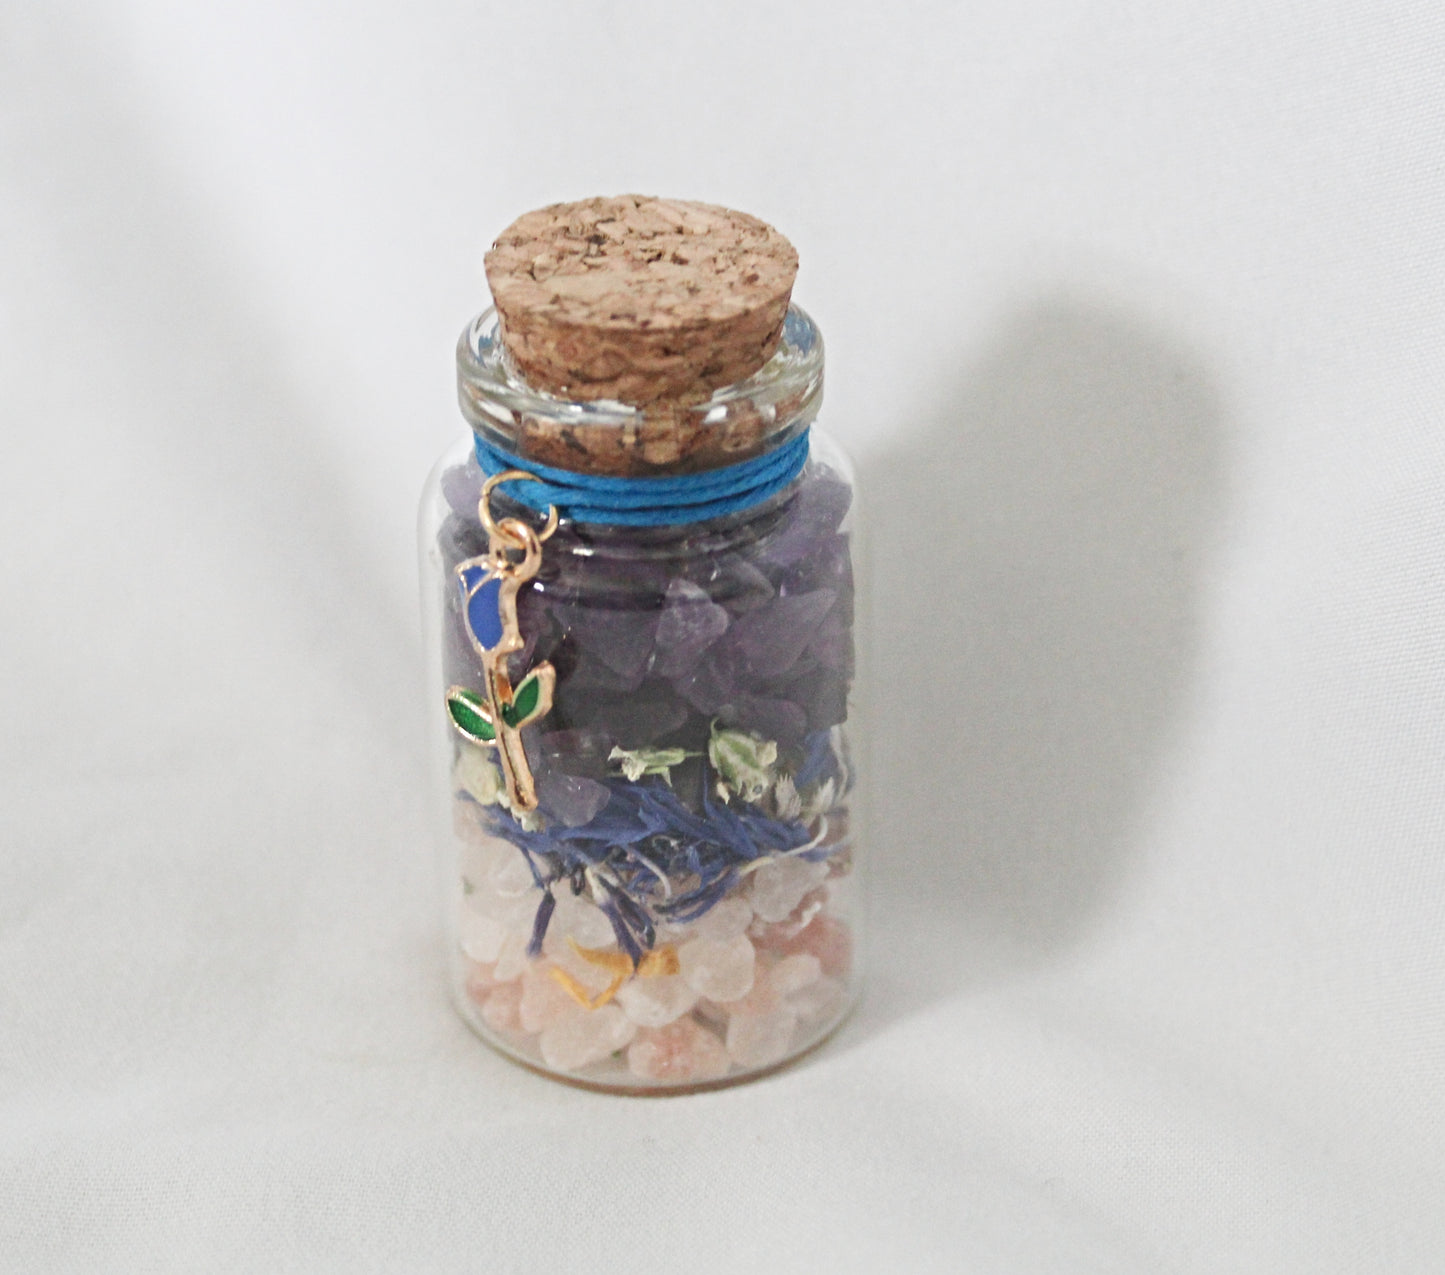 Wildflower Spell Jar featuring Amethyst